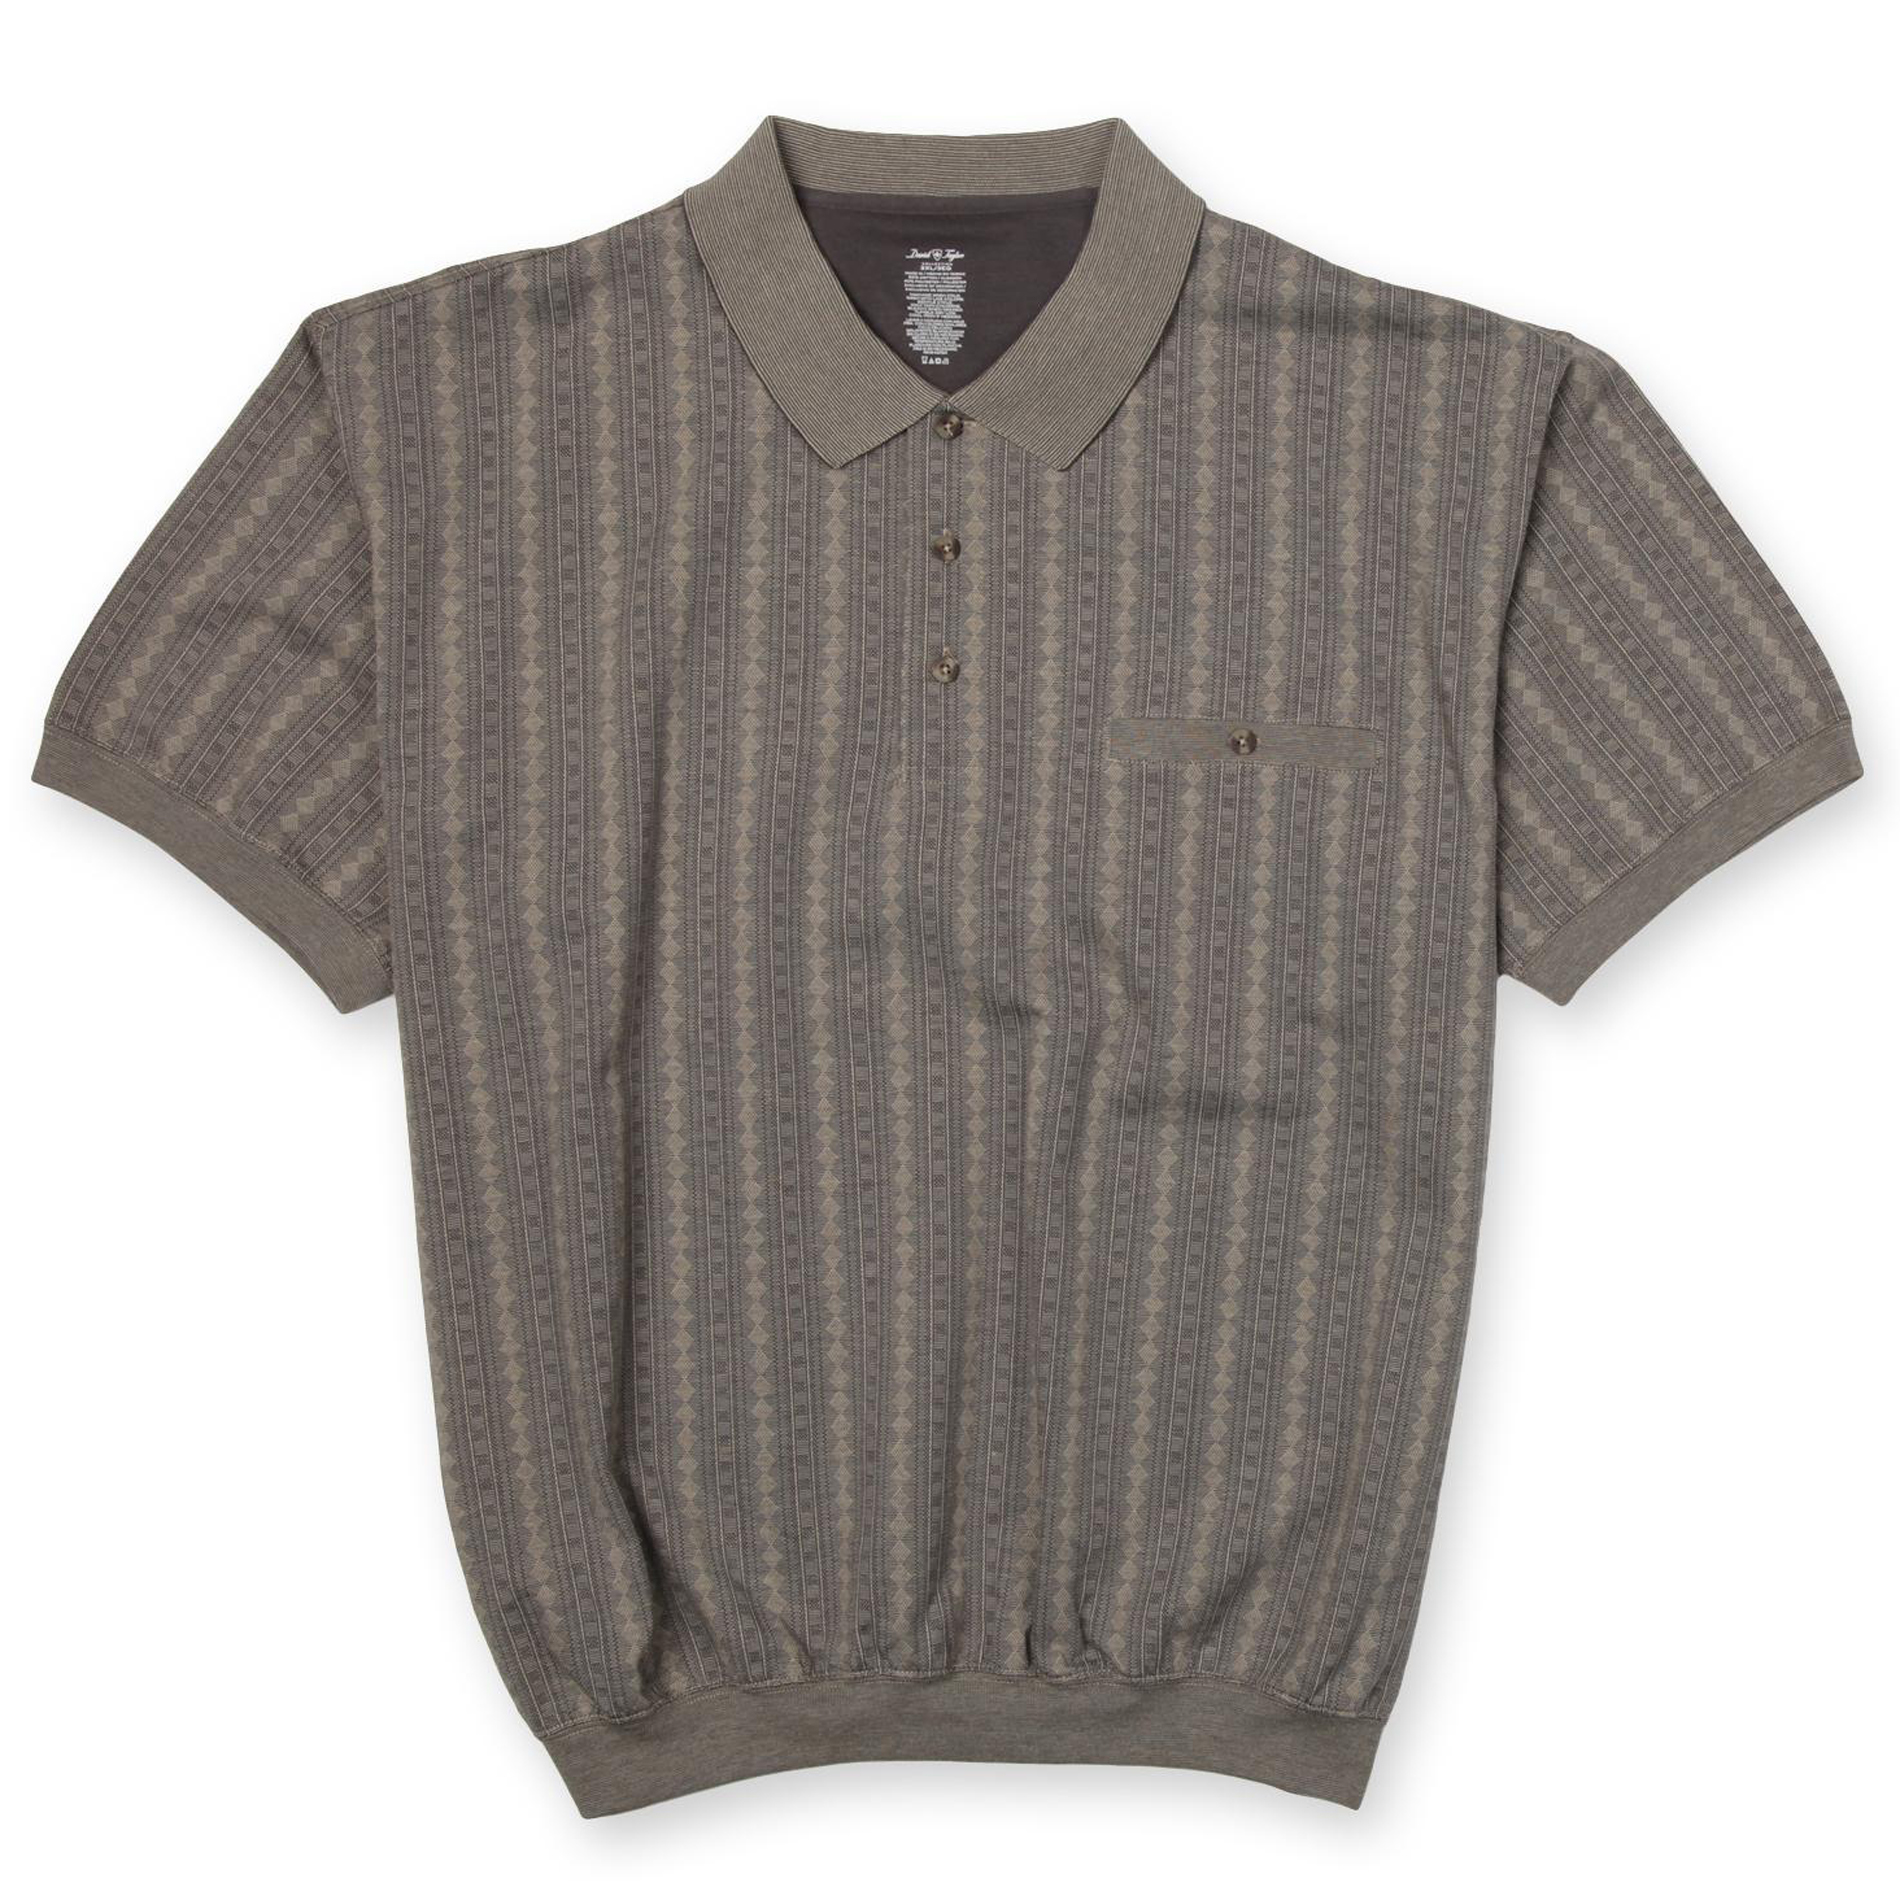 David Taylor Collection Men's Big & Tall Polo Shirt - Jacquard Striped